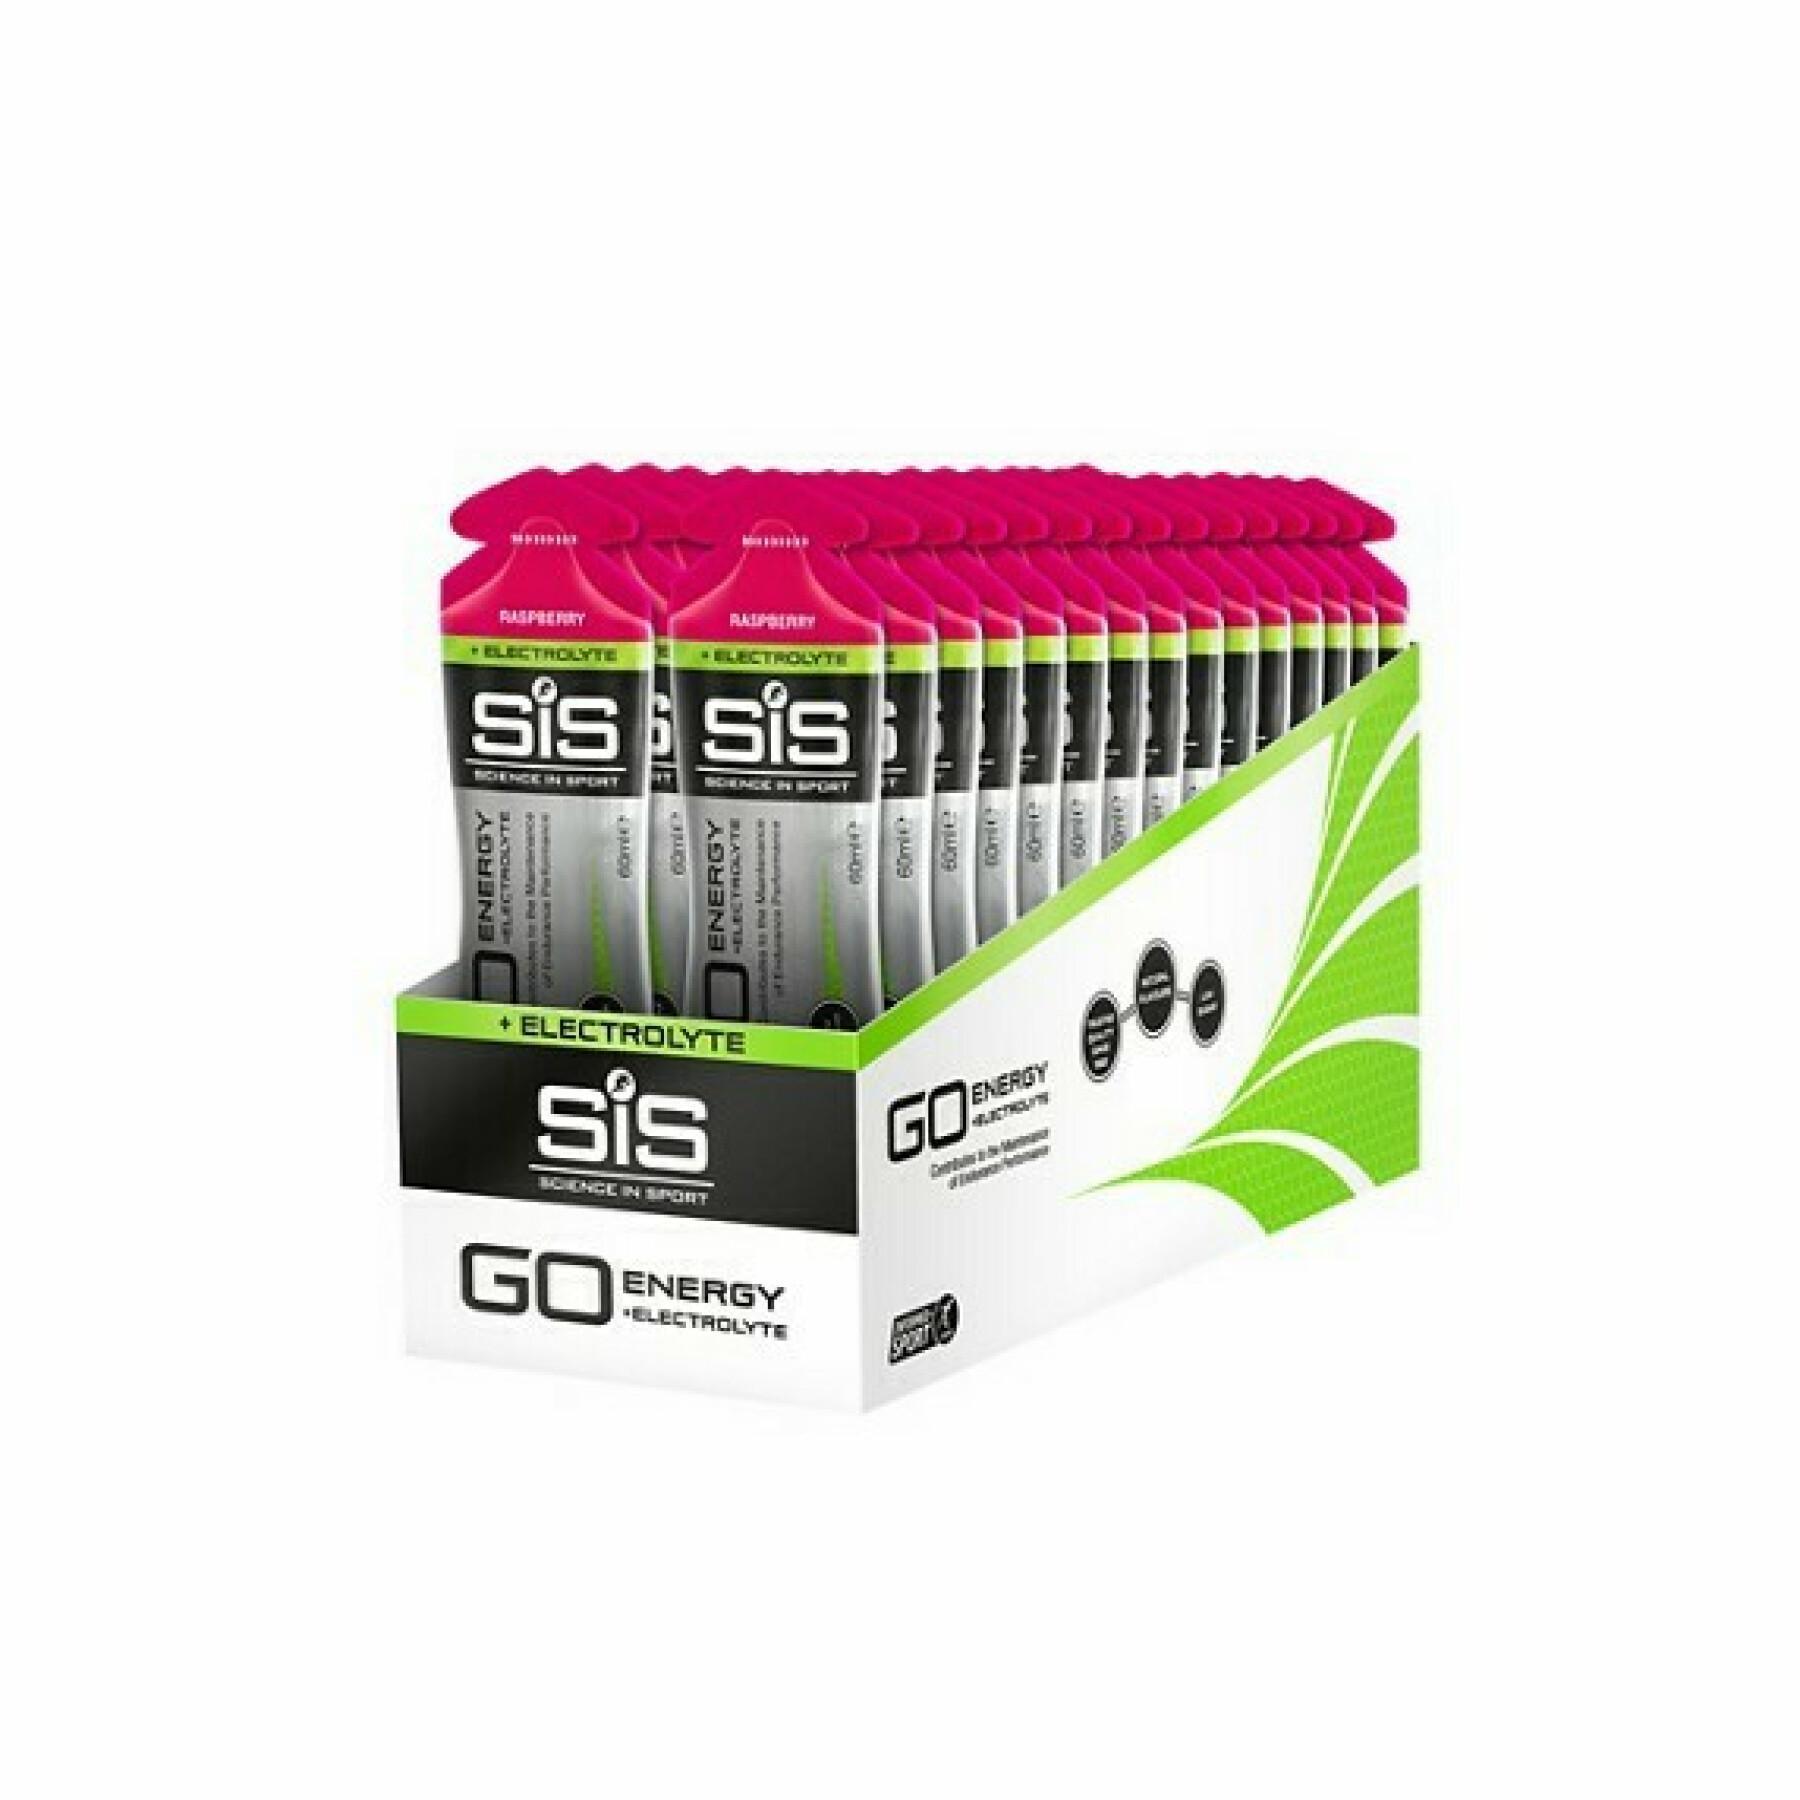 Pack of 30 energy gels Science in Sport Go + Electrolyte - Rose framboise - 60 ml